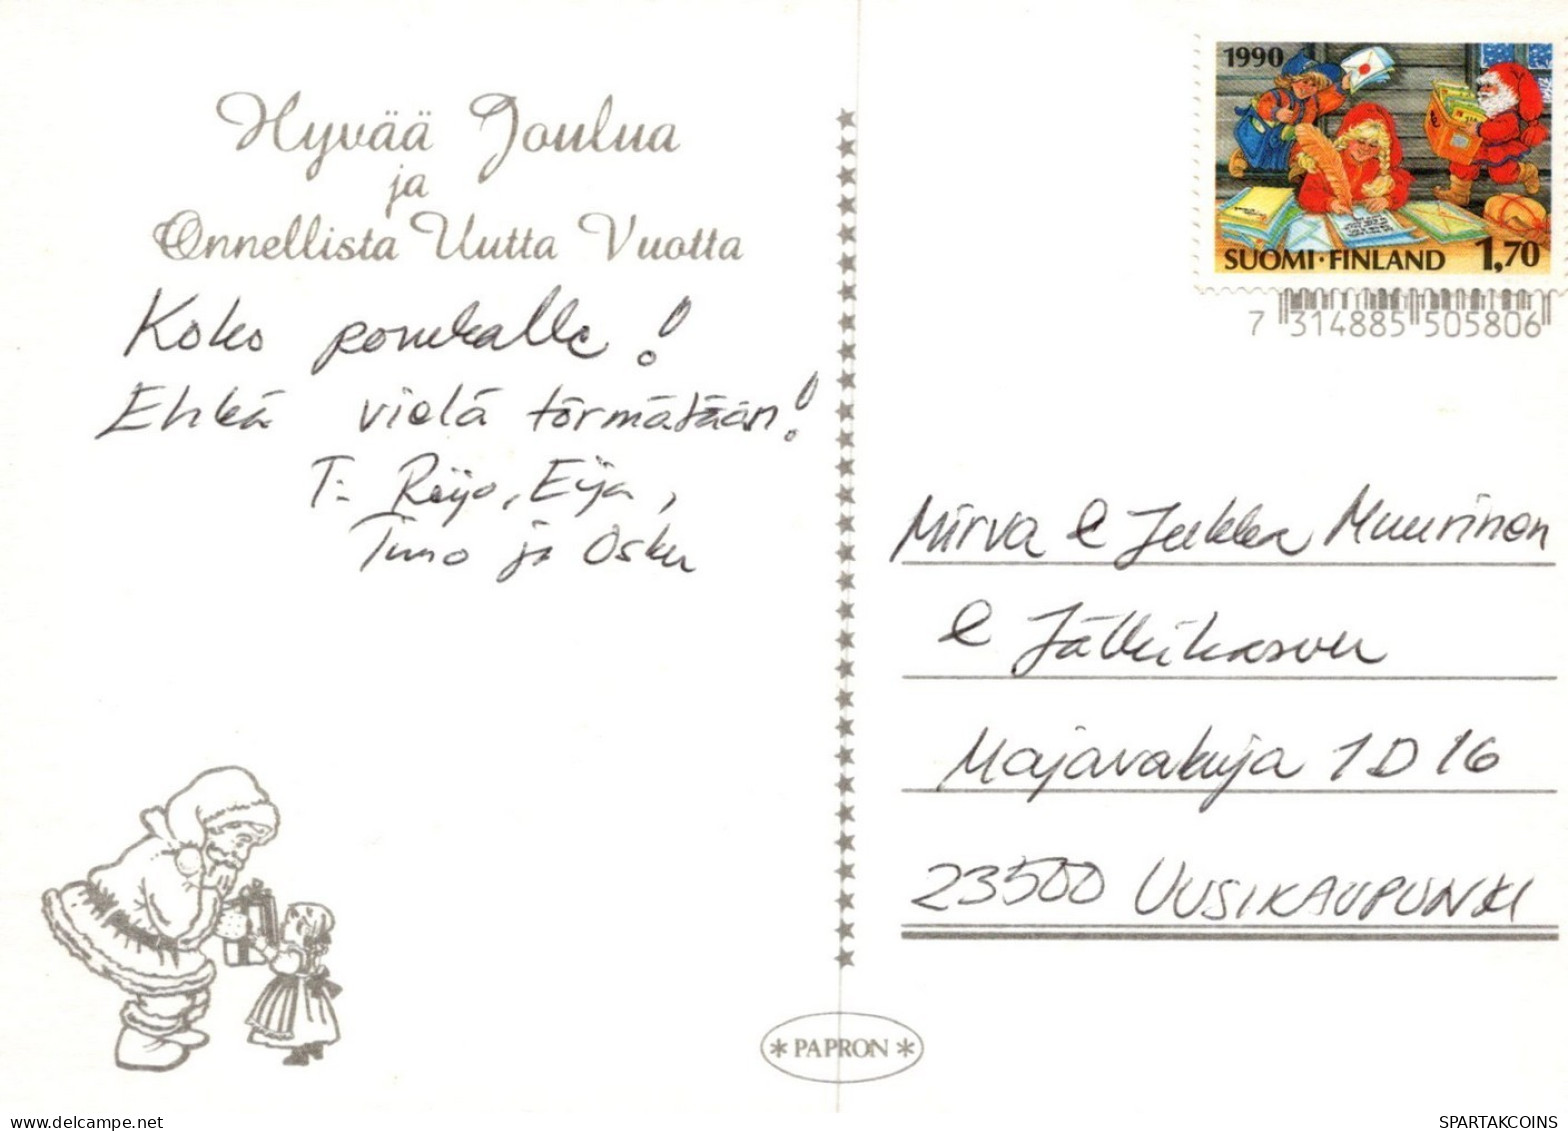 SANTA CLAUS CHILDREN CHRISTMAS Holidays Vintage Postcard CPSM #PAK309.GB - Kerstman